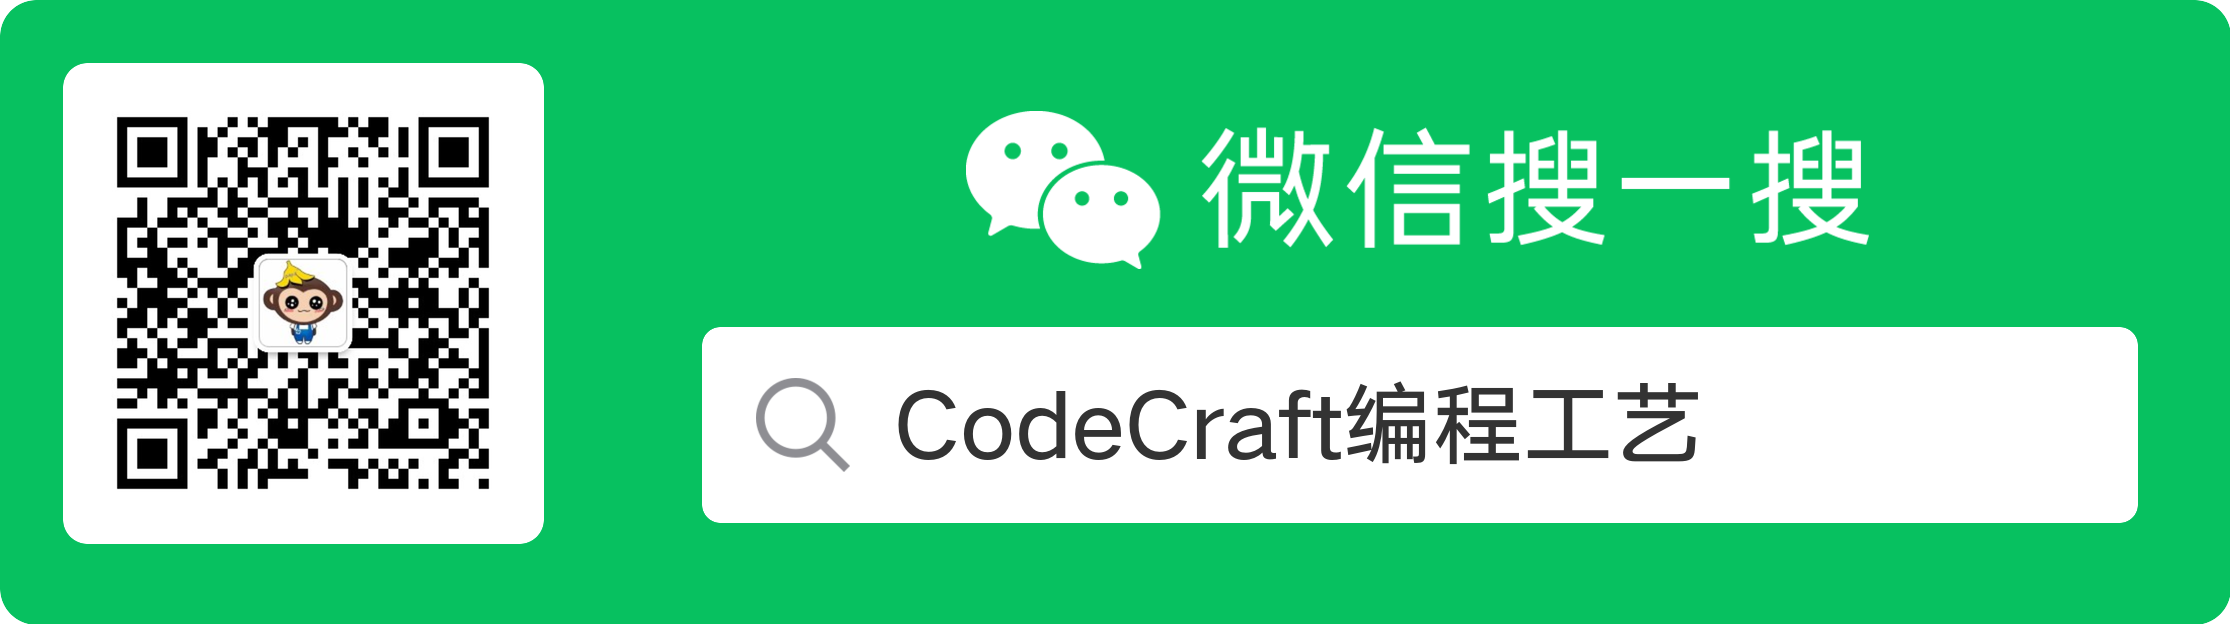 codeCraft编程工艺,小鱼吃猫